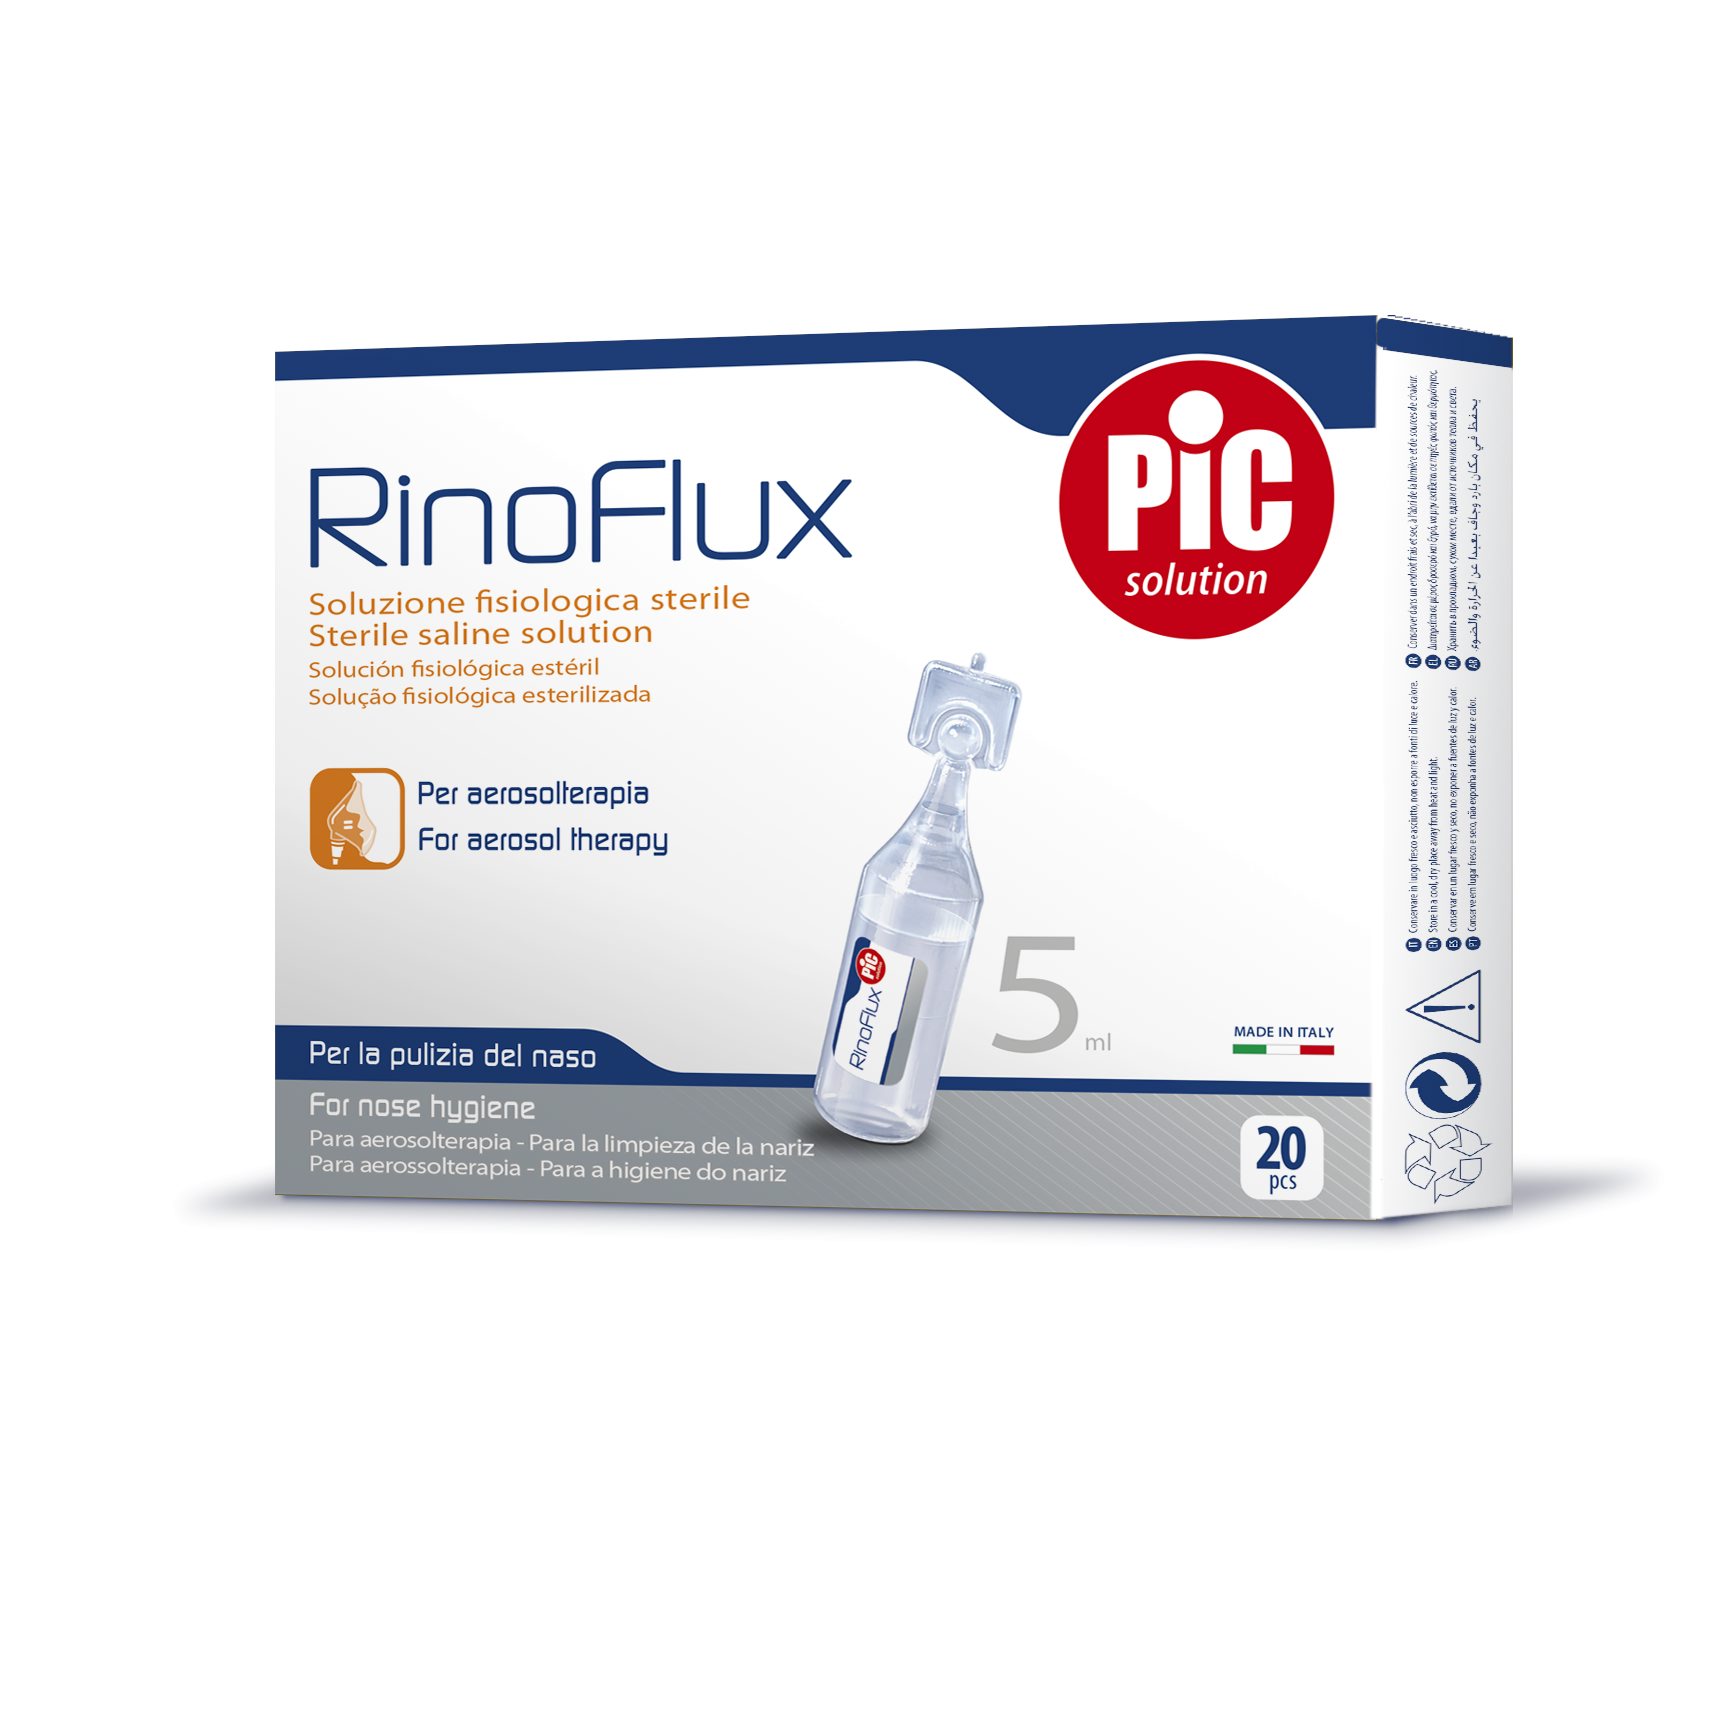 RinoFlux fiziologinis tirpalas inhaliacijoms ir nosiai, 20  vnt.